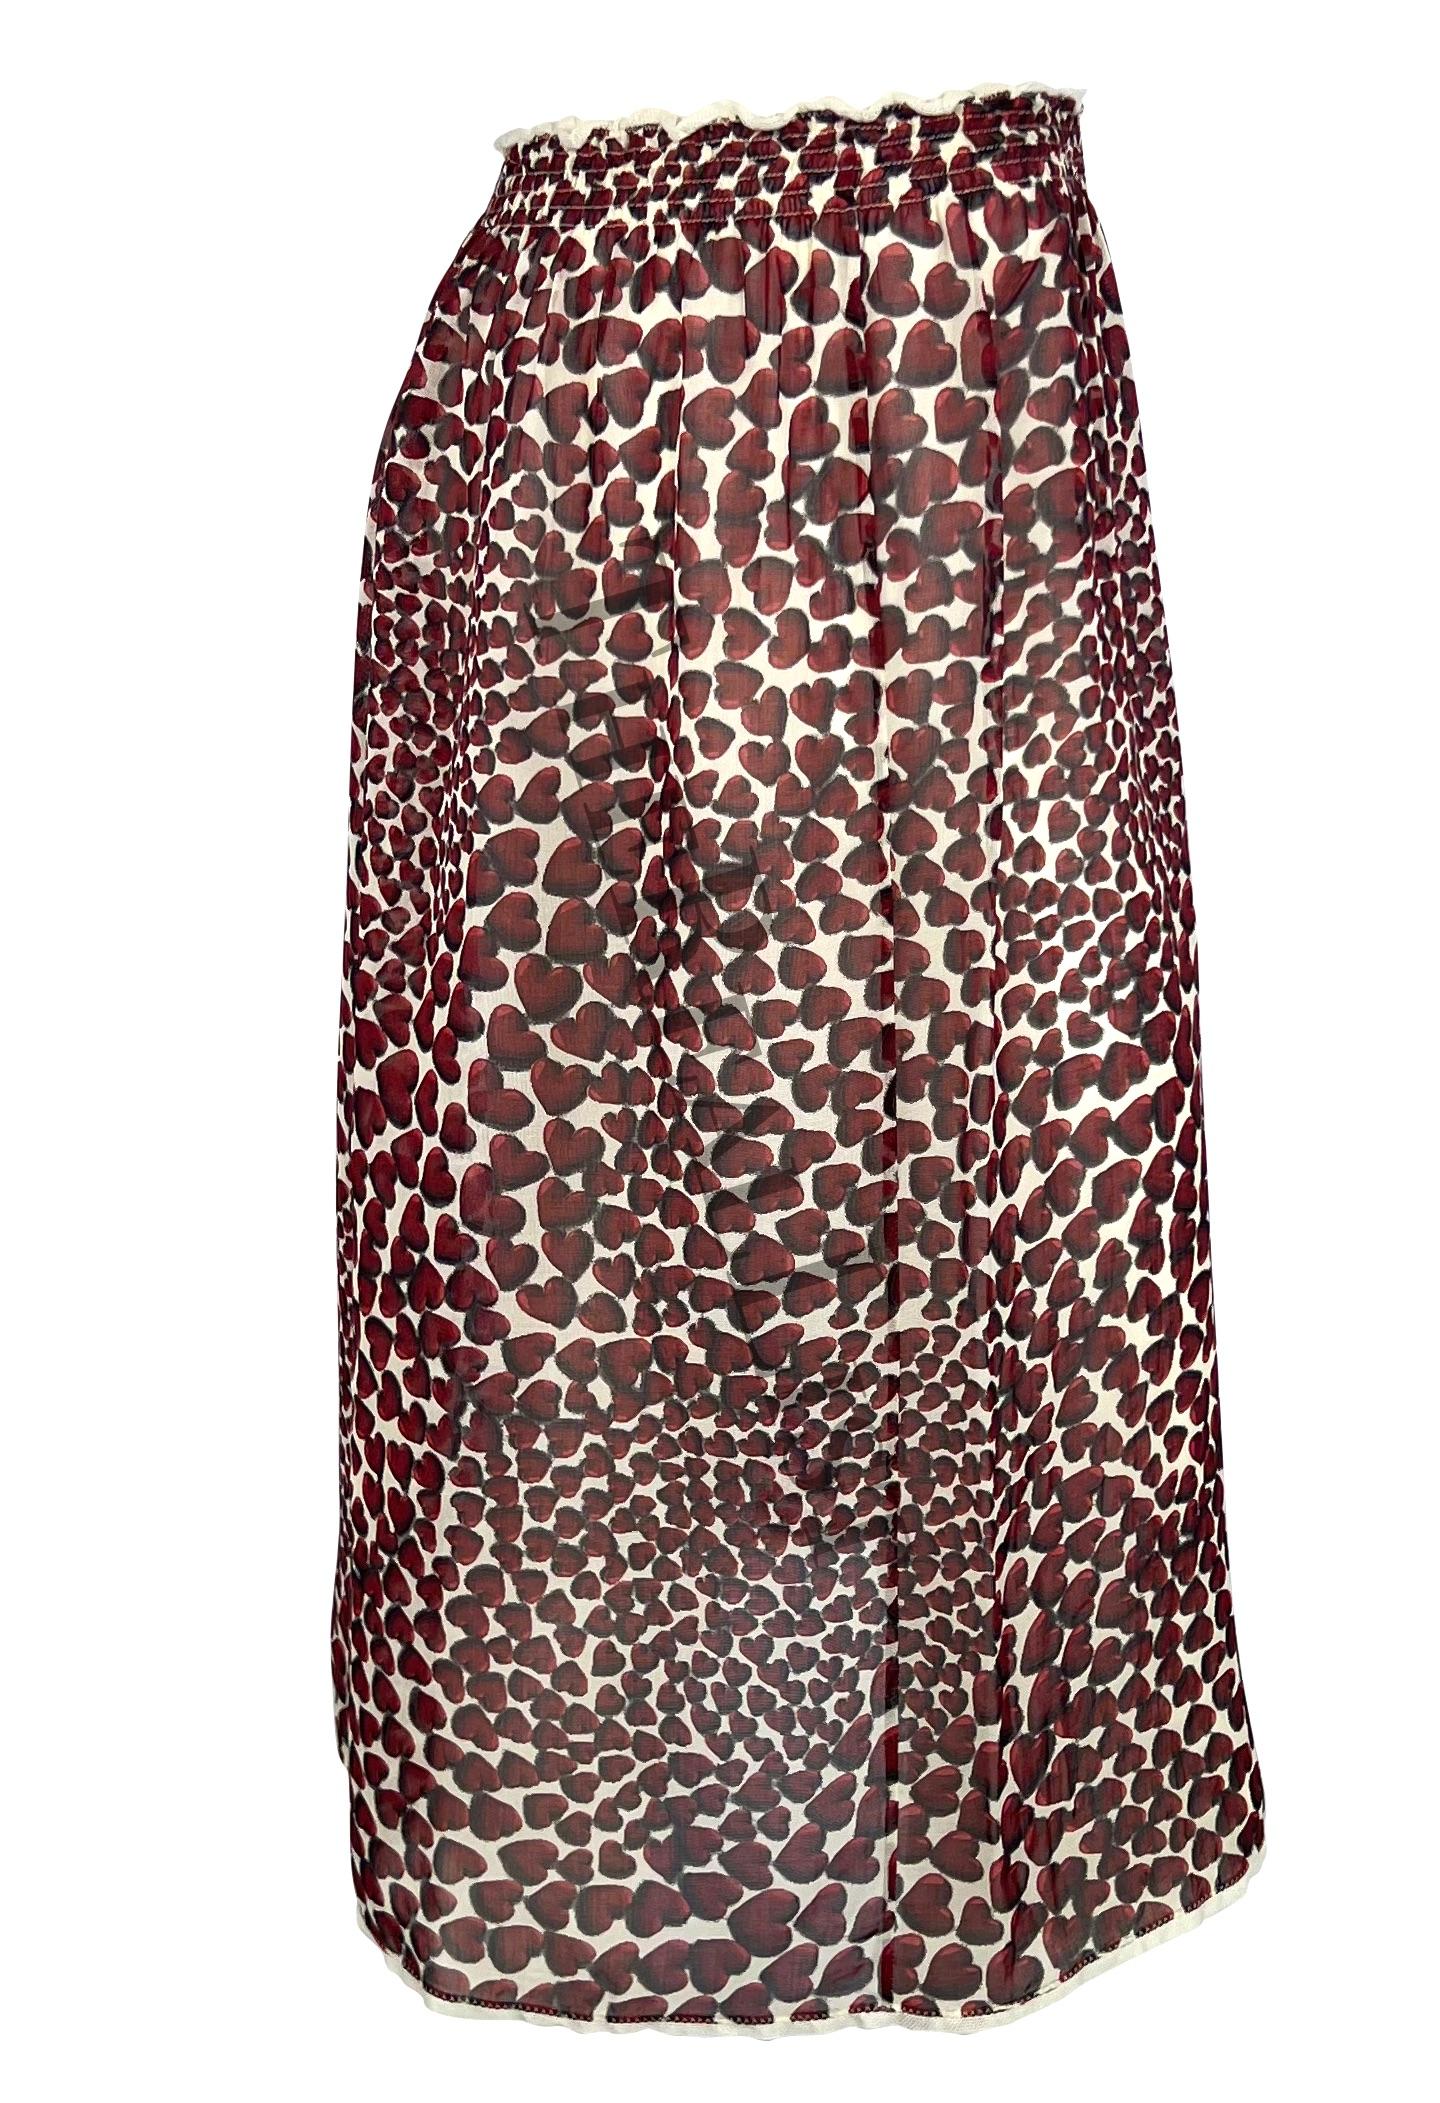 S/S 2000 Prada by Miuccia Runway Semi-Sheer Heart Print Chiffon Skirt For Sale 1